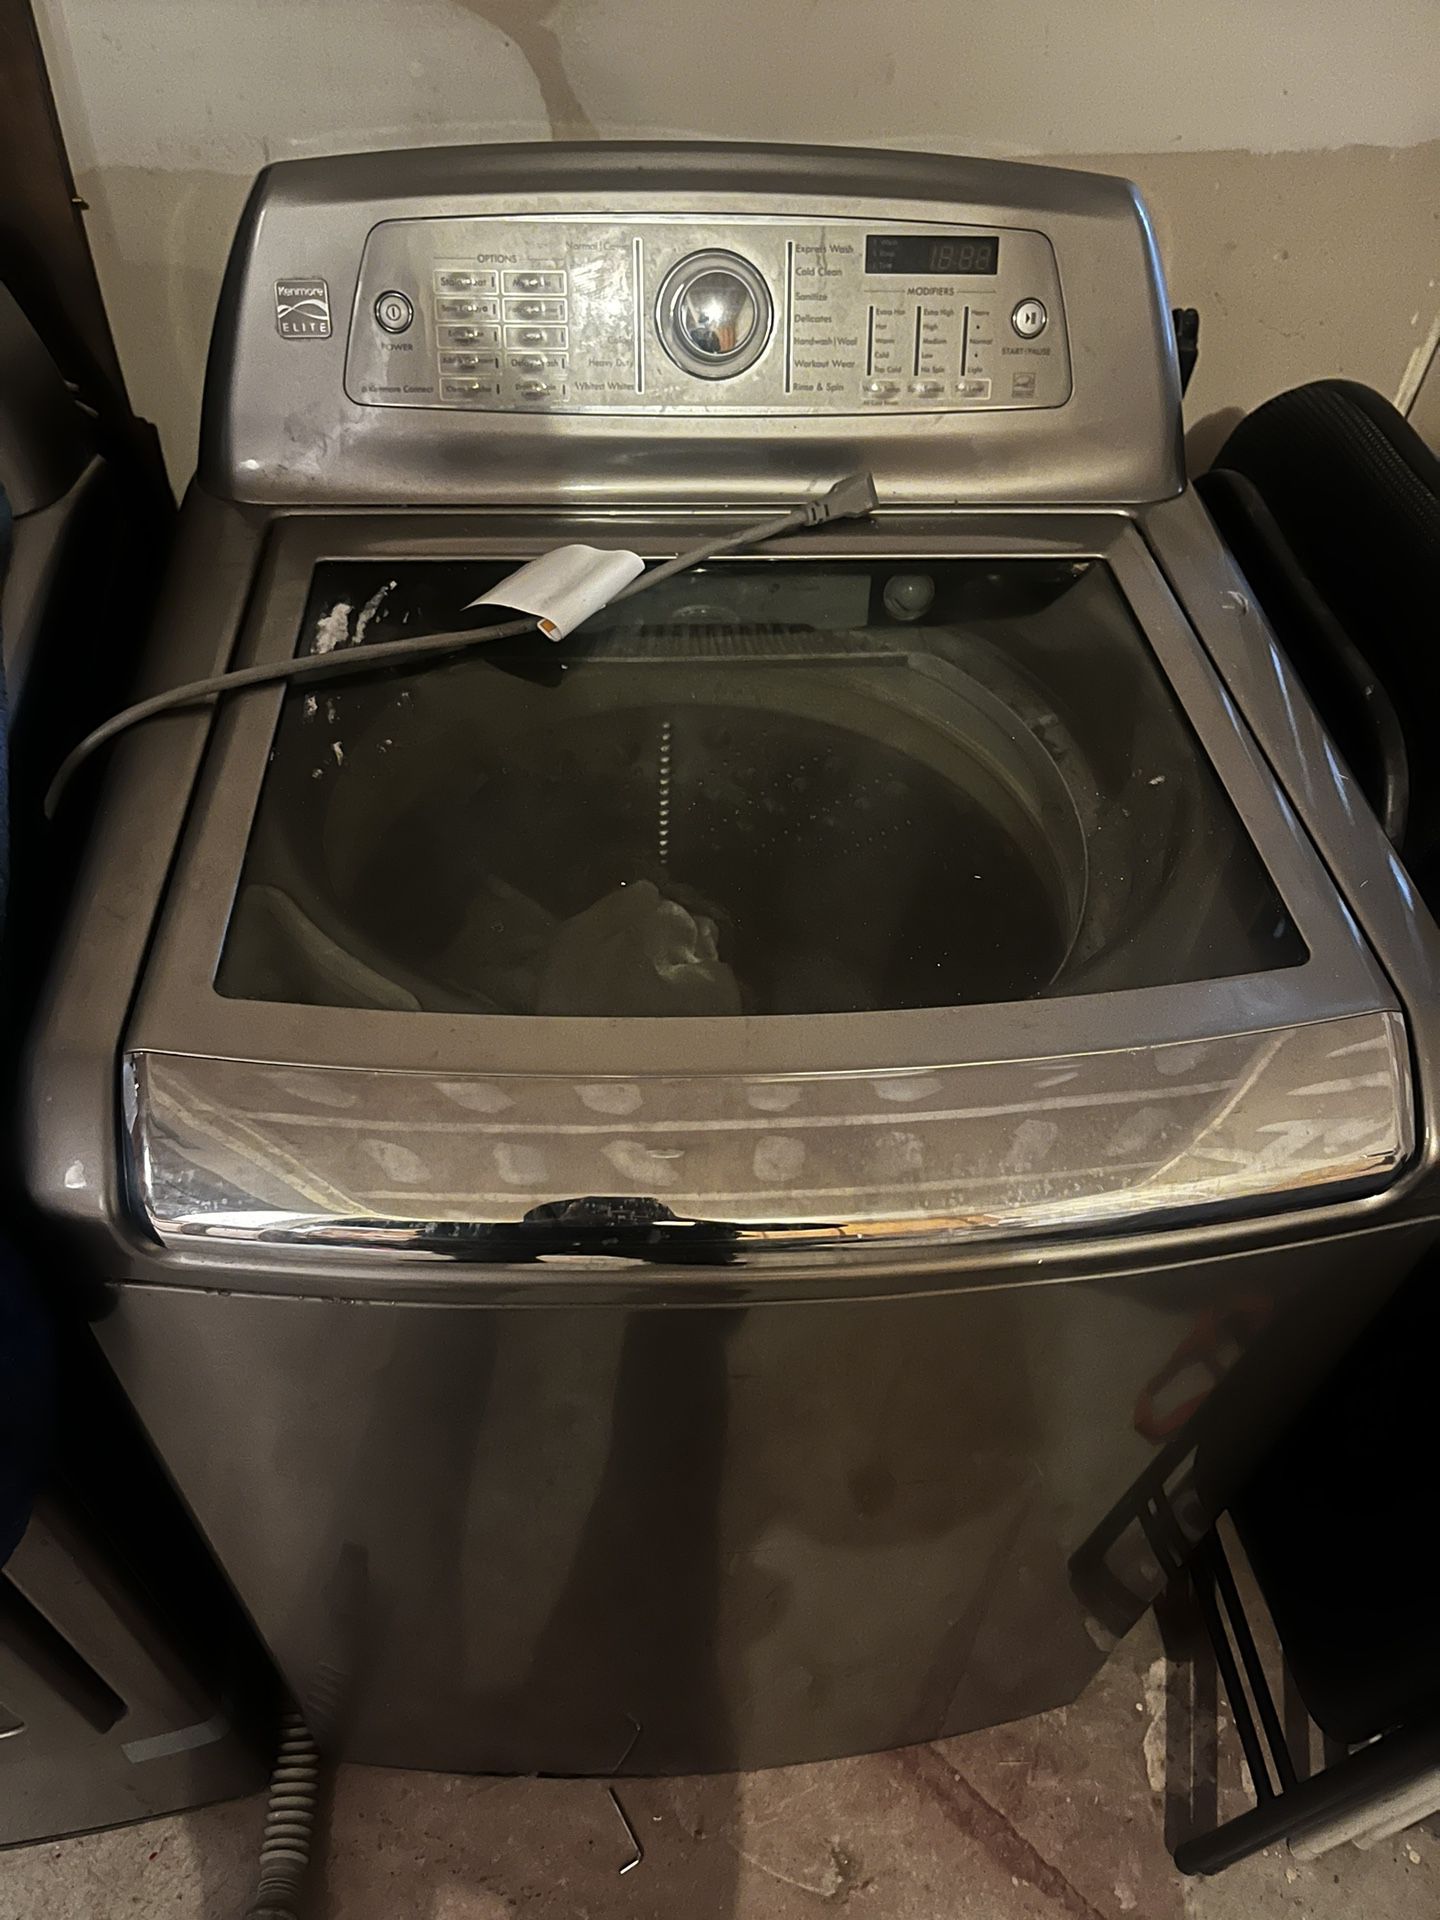 Washer & Dryer Set (Kenmore Elite)